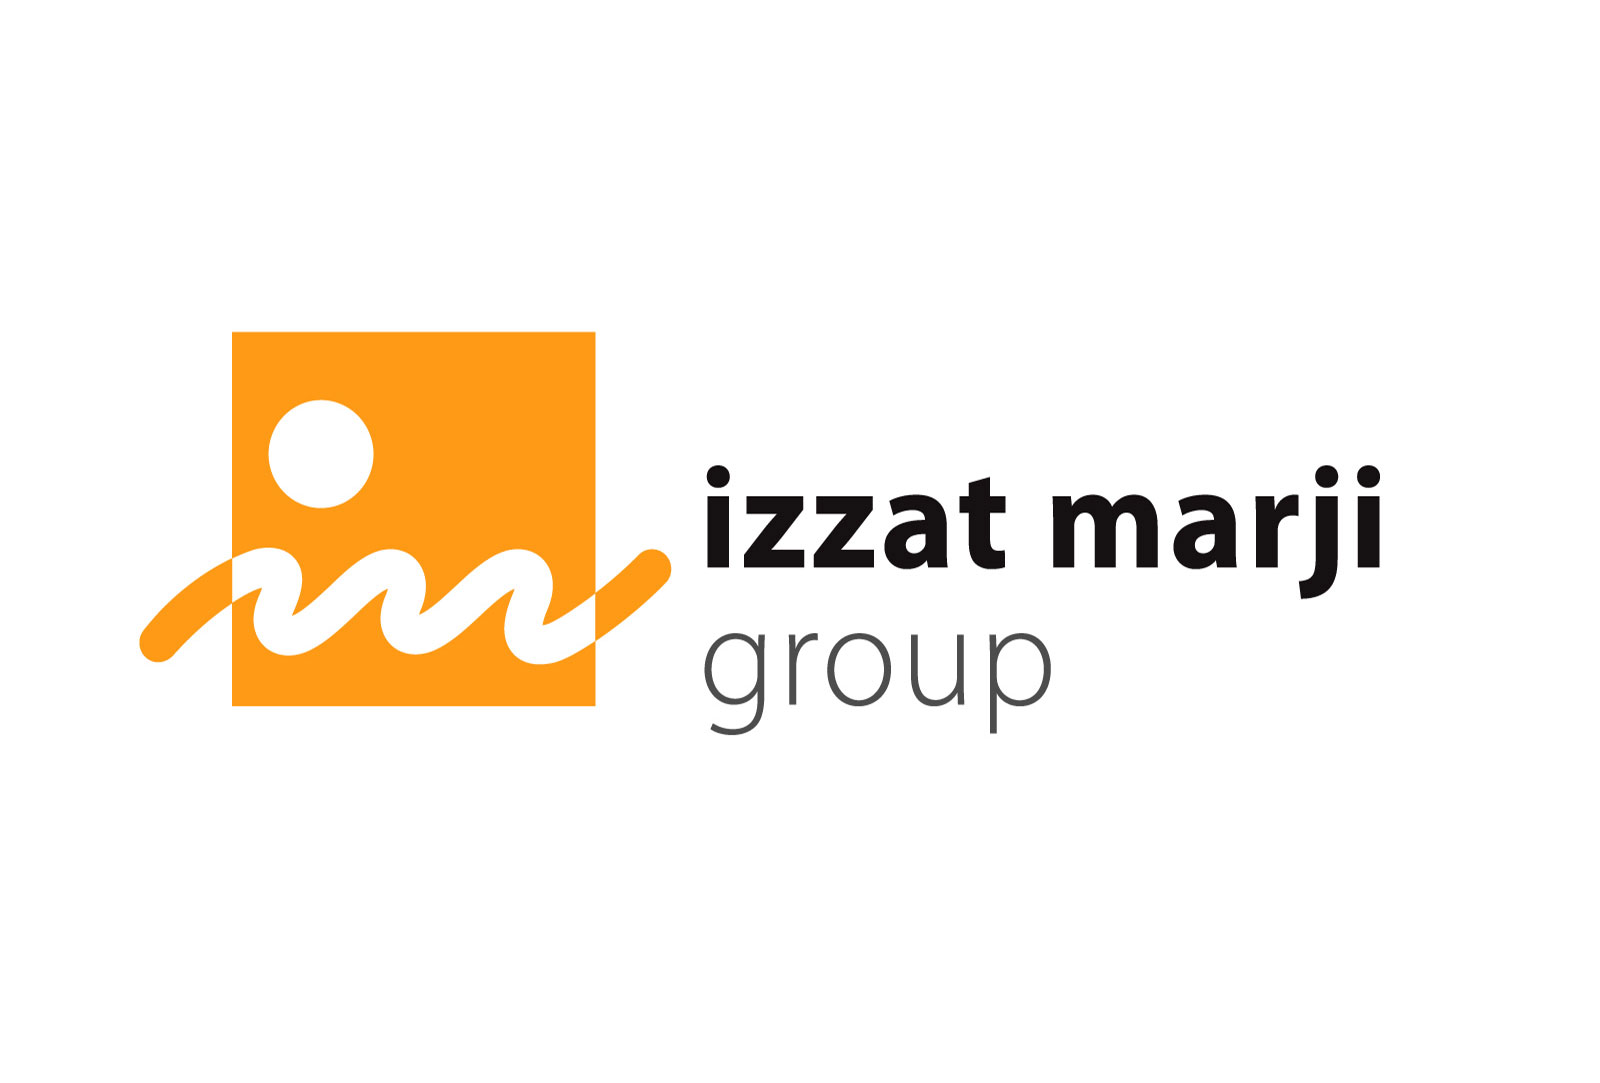 Izzat Marji Group logo designed by Creations